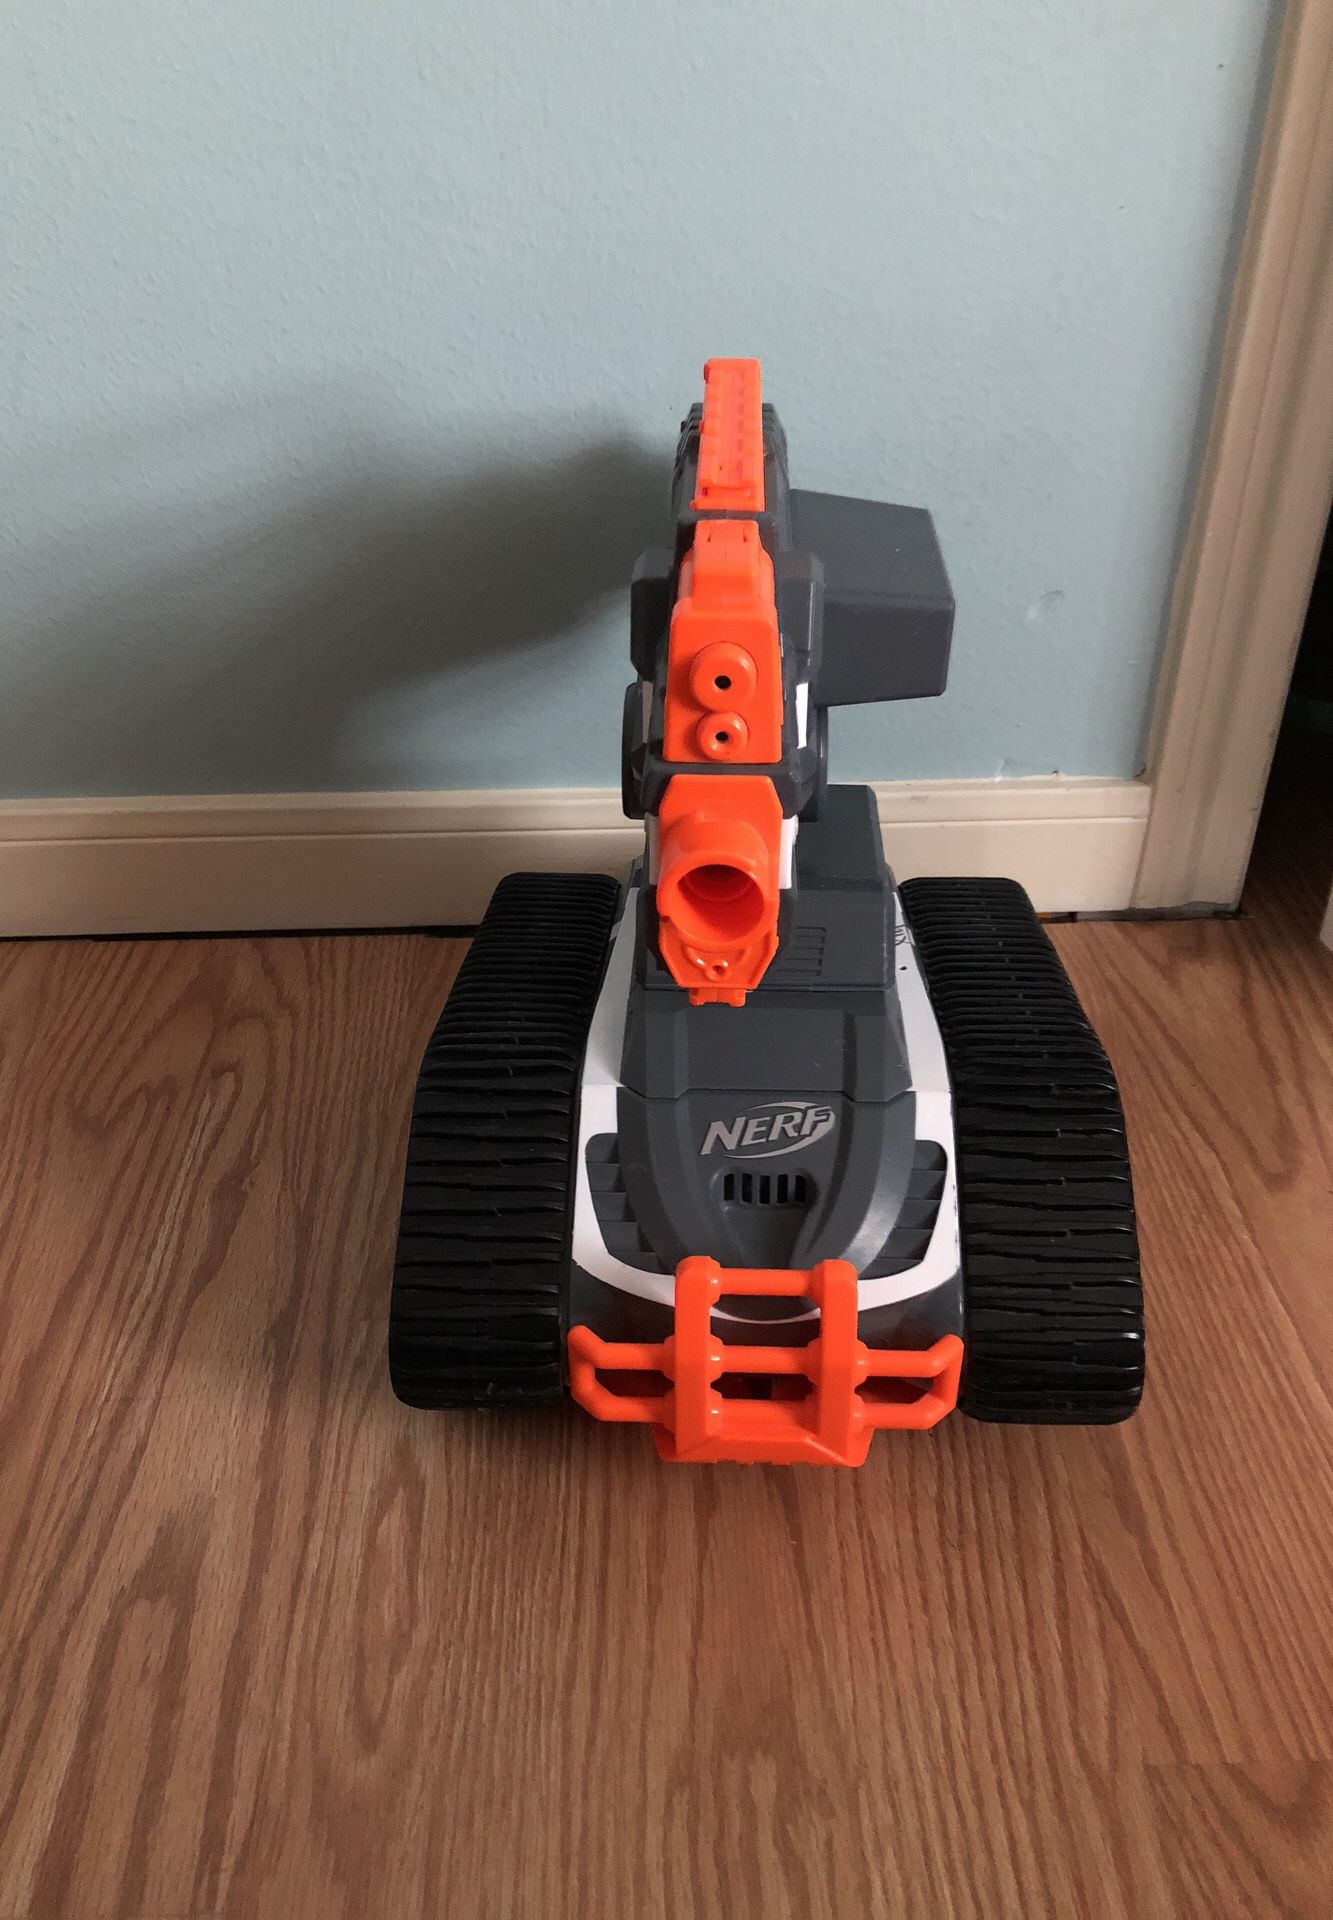 Nerf gun robot